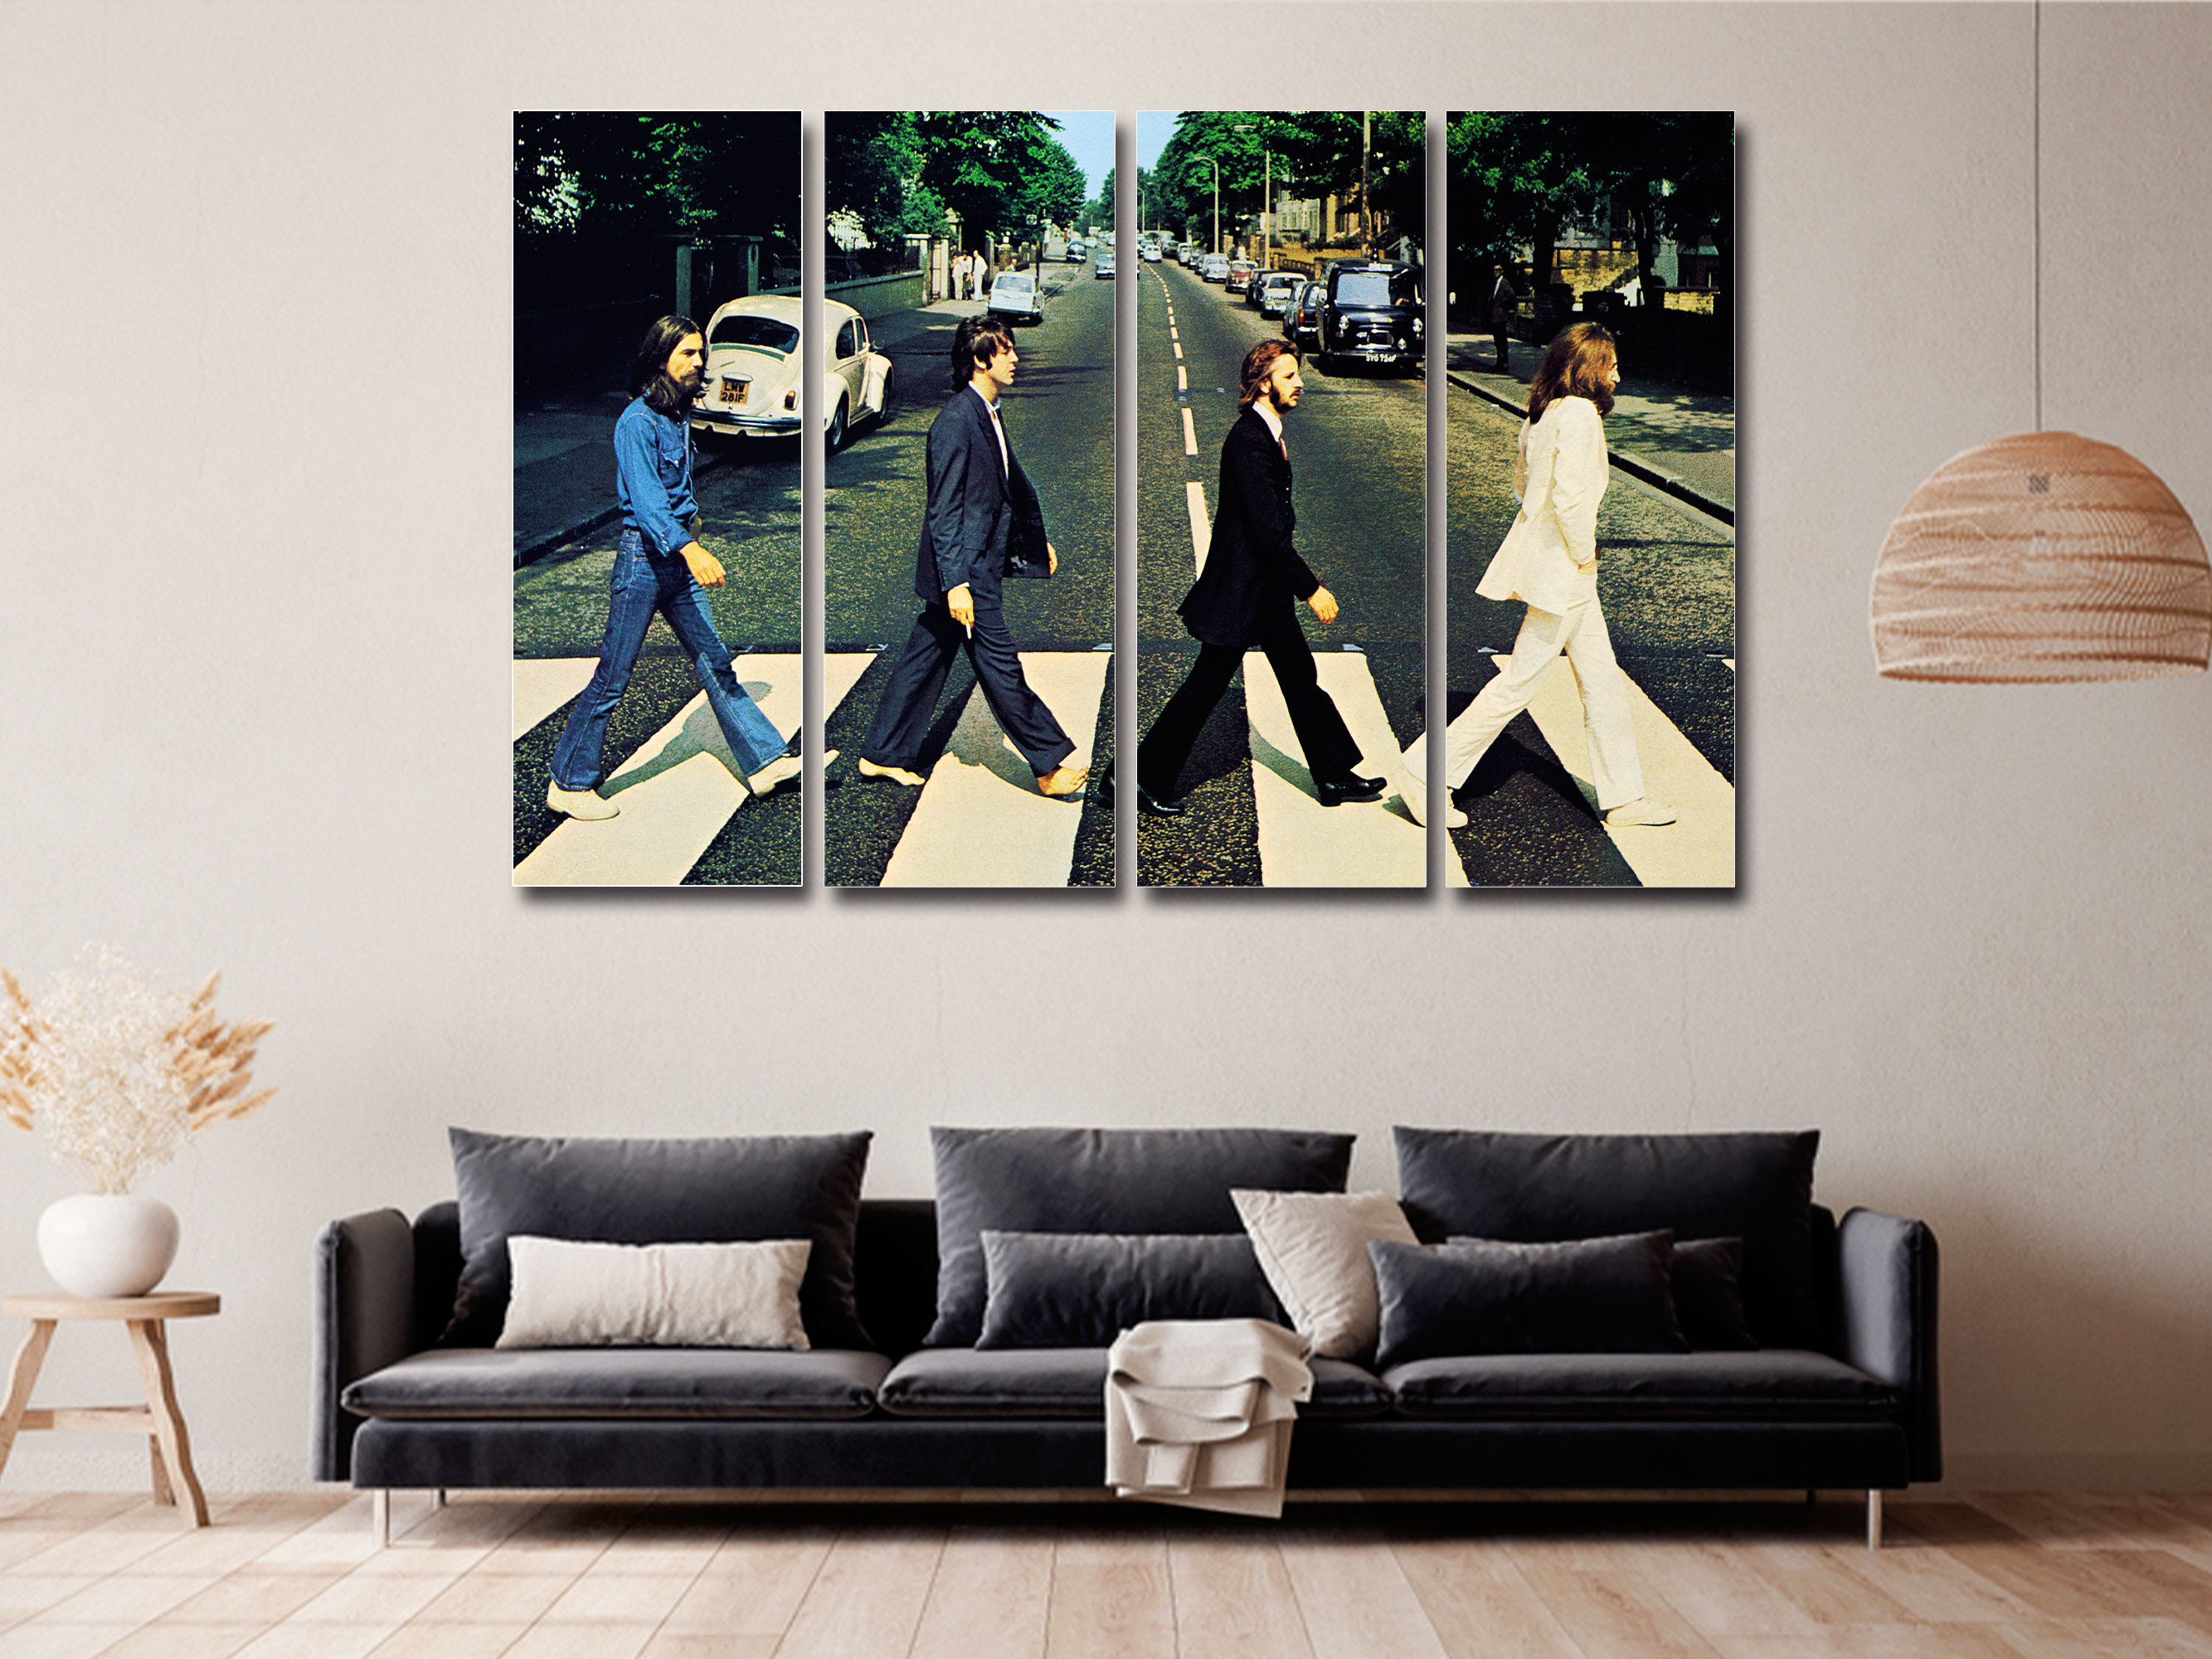 The Beatles Logo Wall Decal Music Band Group Wall Art Vinyl Mural